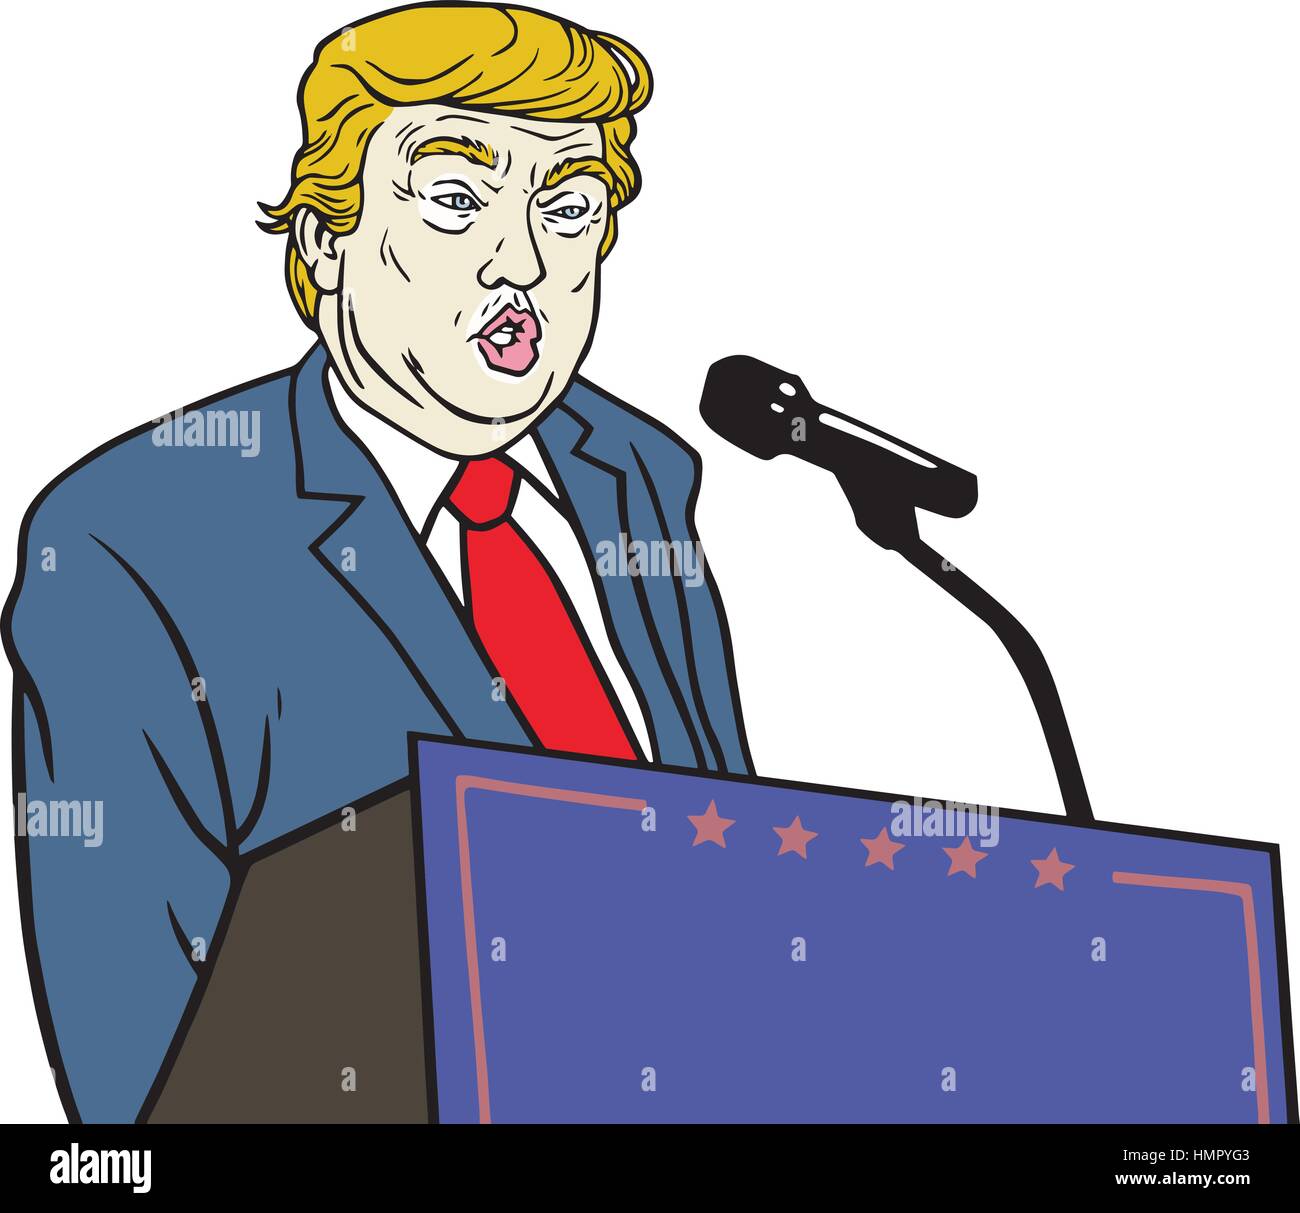 Donald Trump Inauguration Speech Vector Portrait Illustration Stock Vector